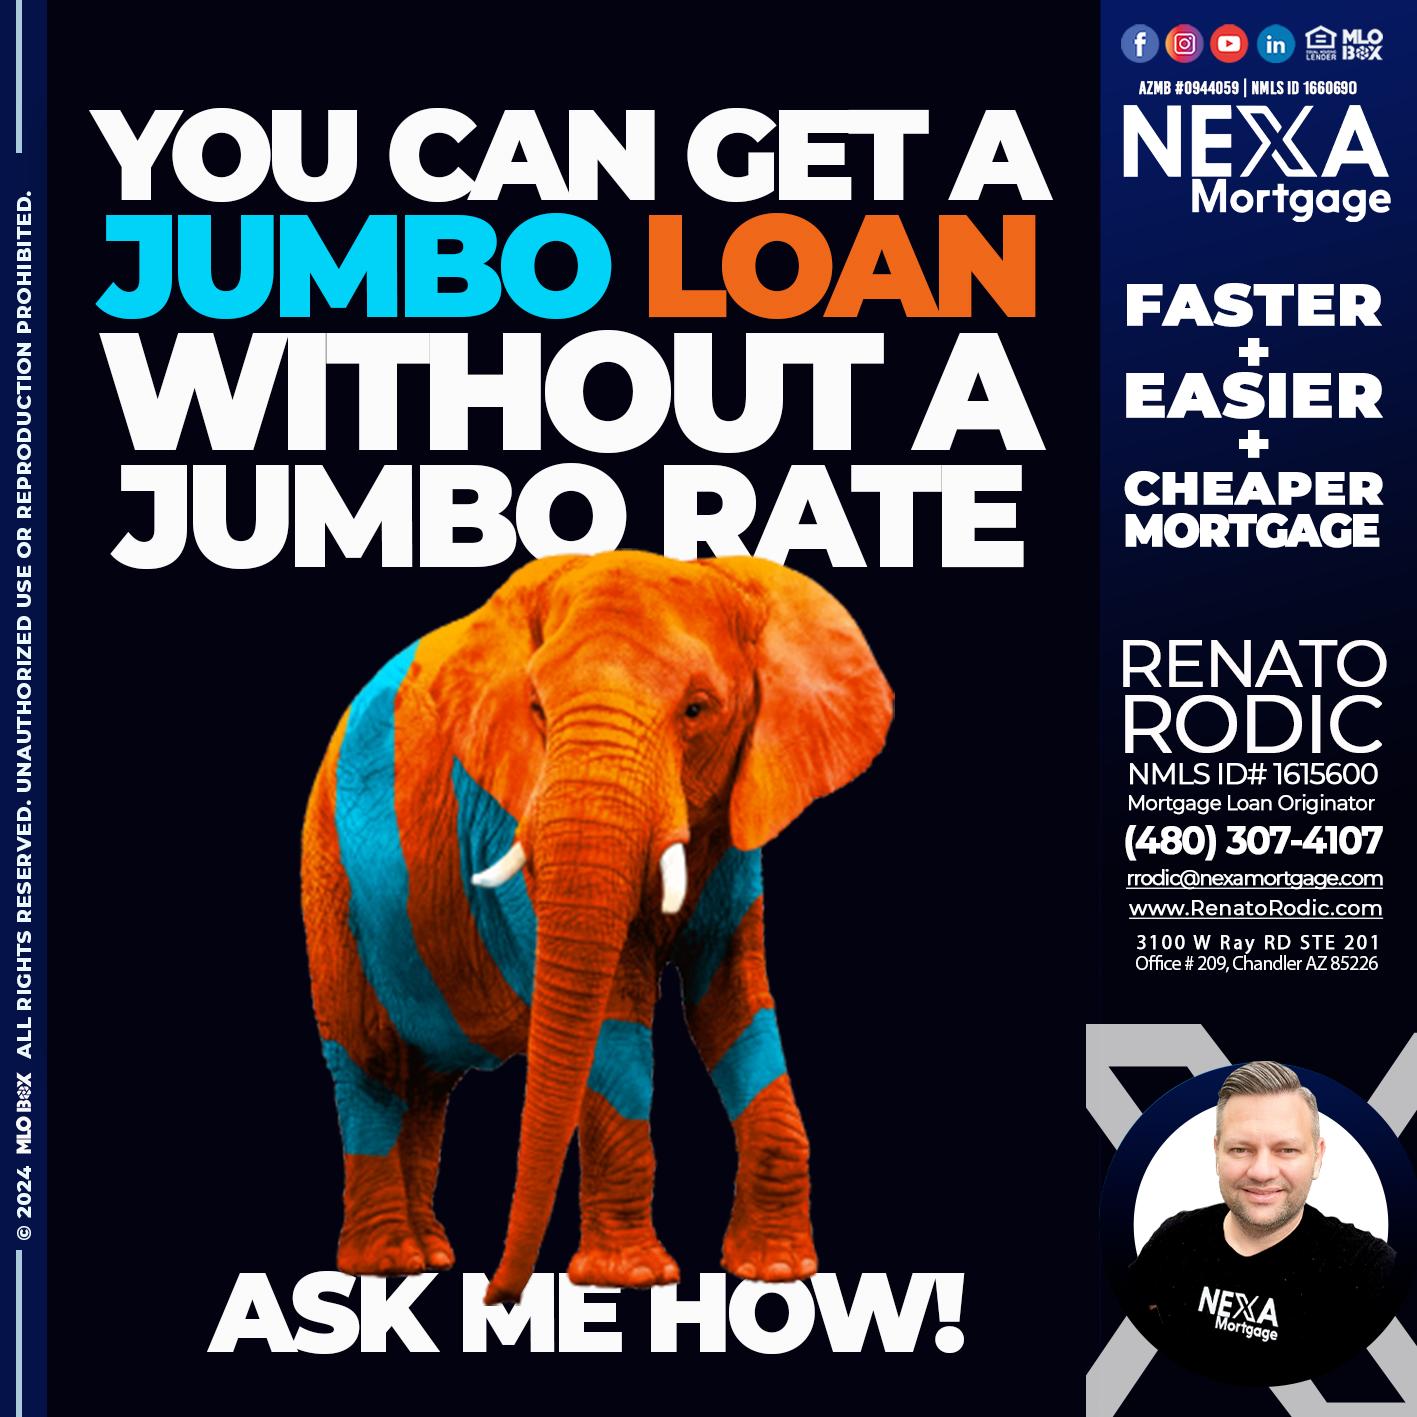 JUMBO LOAN - Renato Rodic -Mortgage Loan Originator